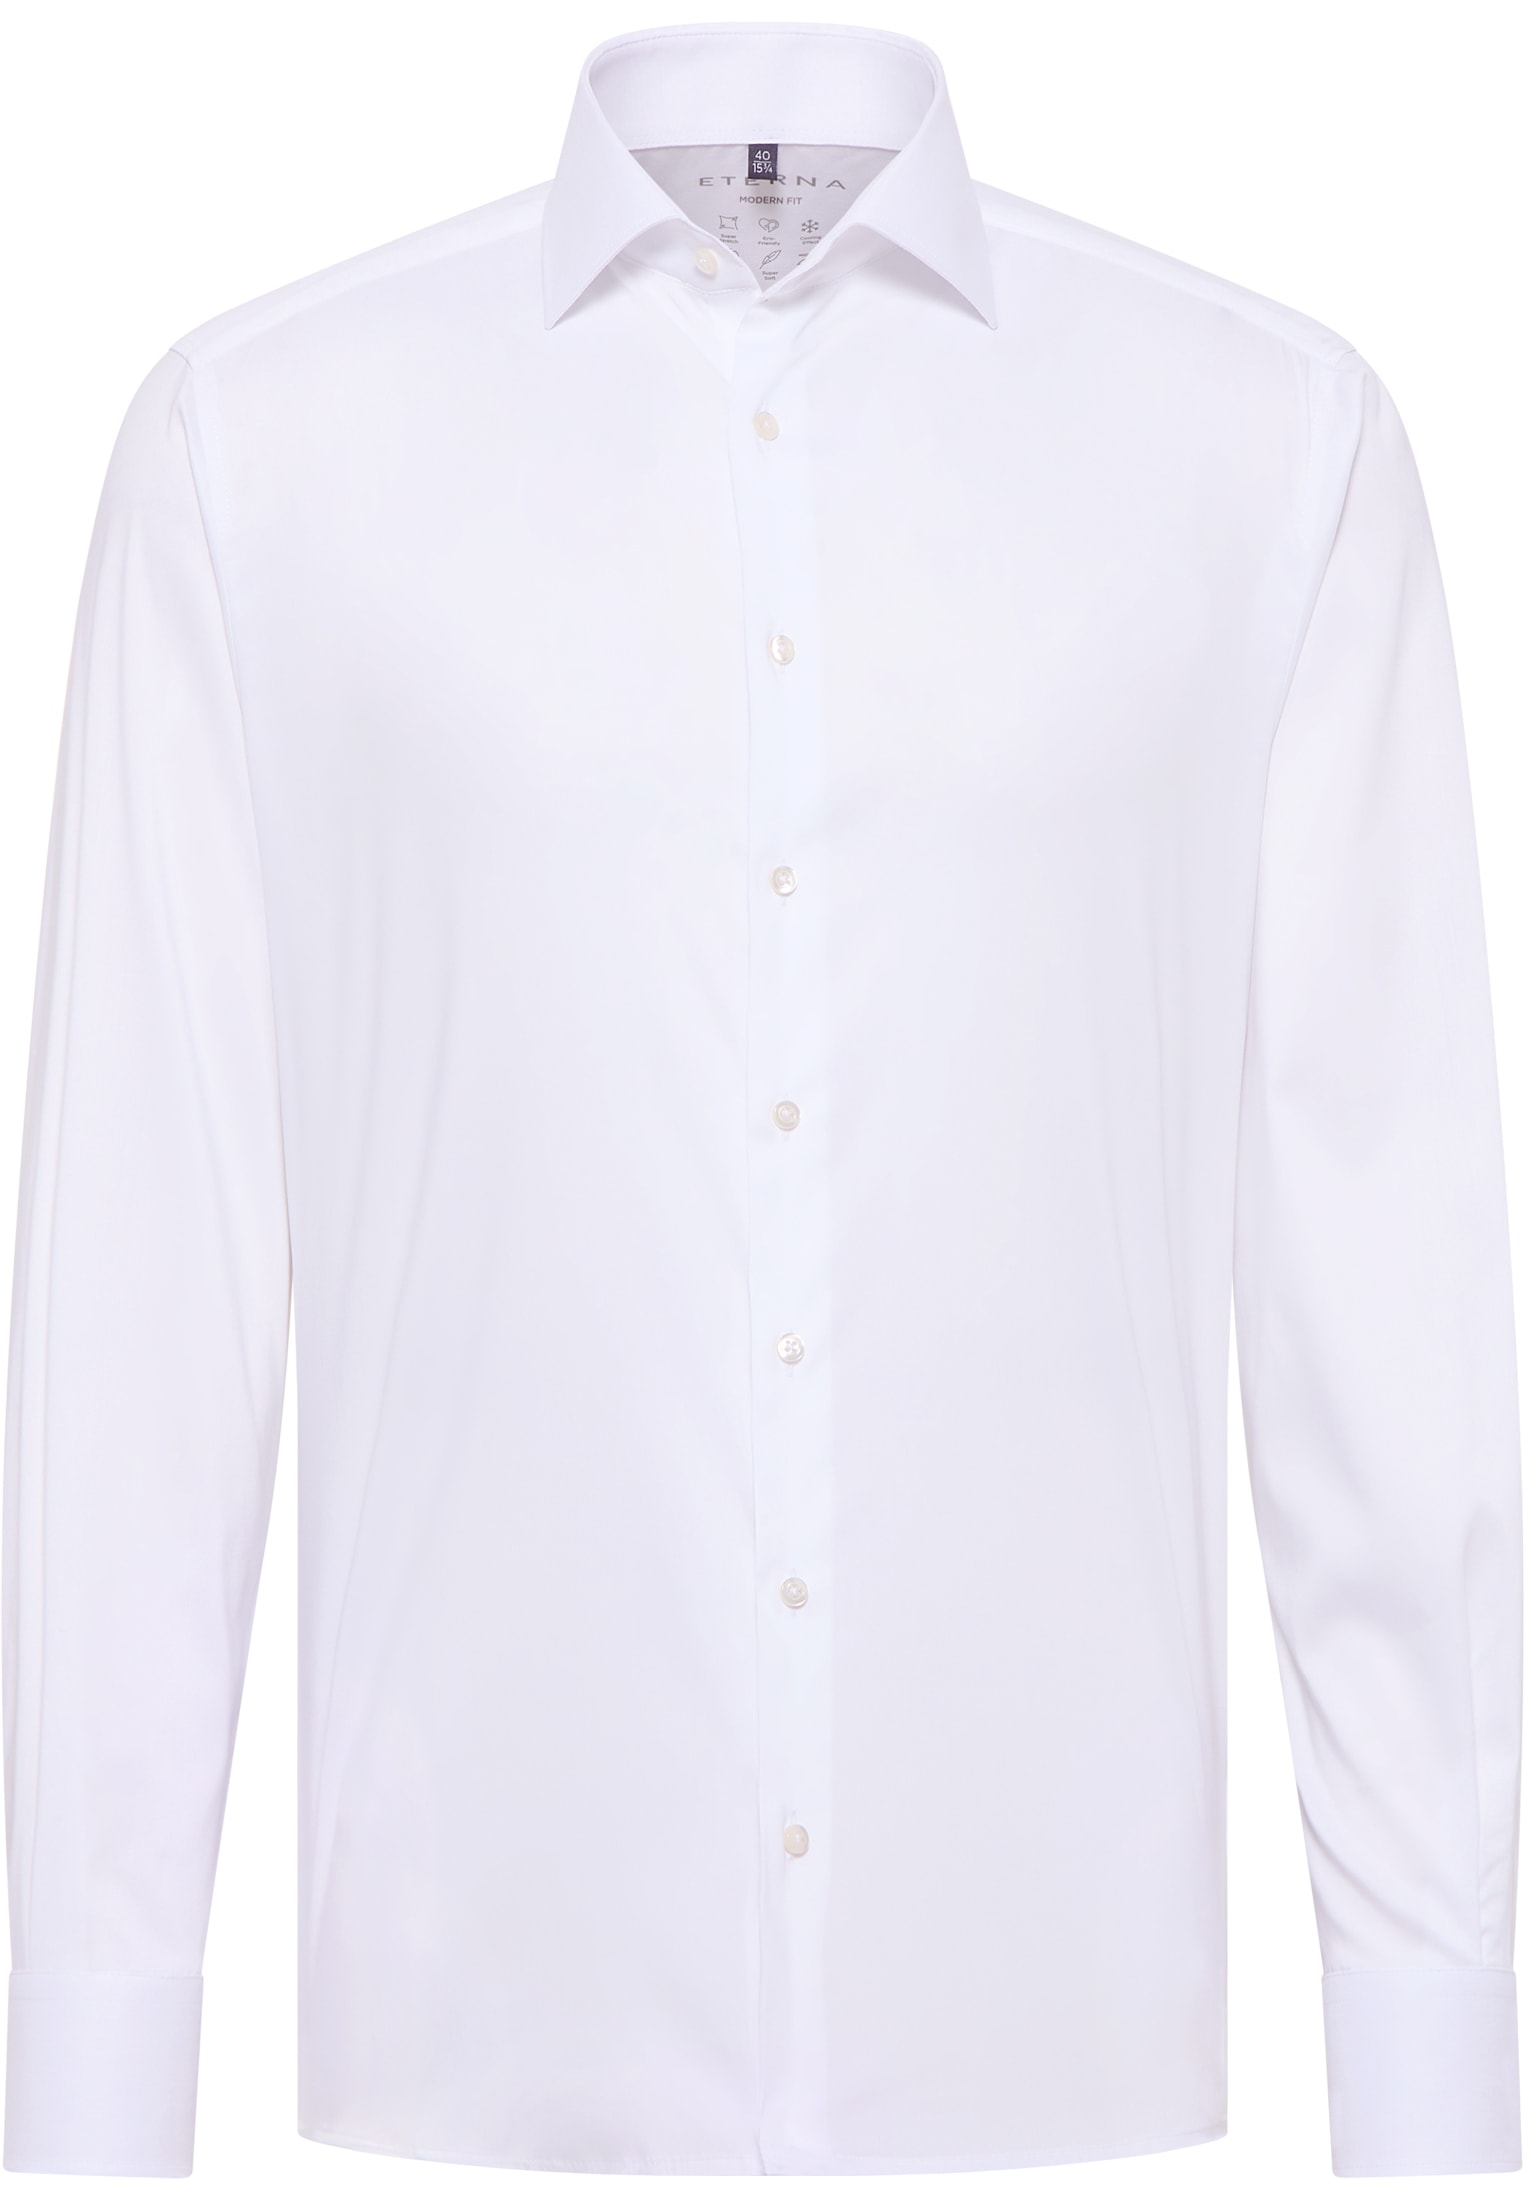 MODERN FIT Performance Shirt in | 39 1SH02224-00-01-39-1/1 Langarm | | unifarben | weiß weiß